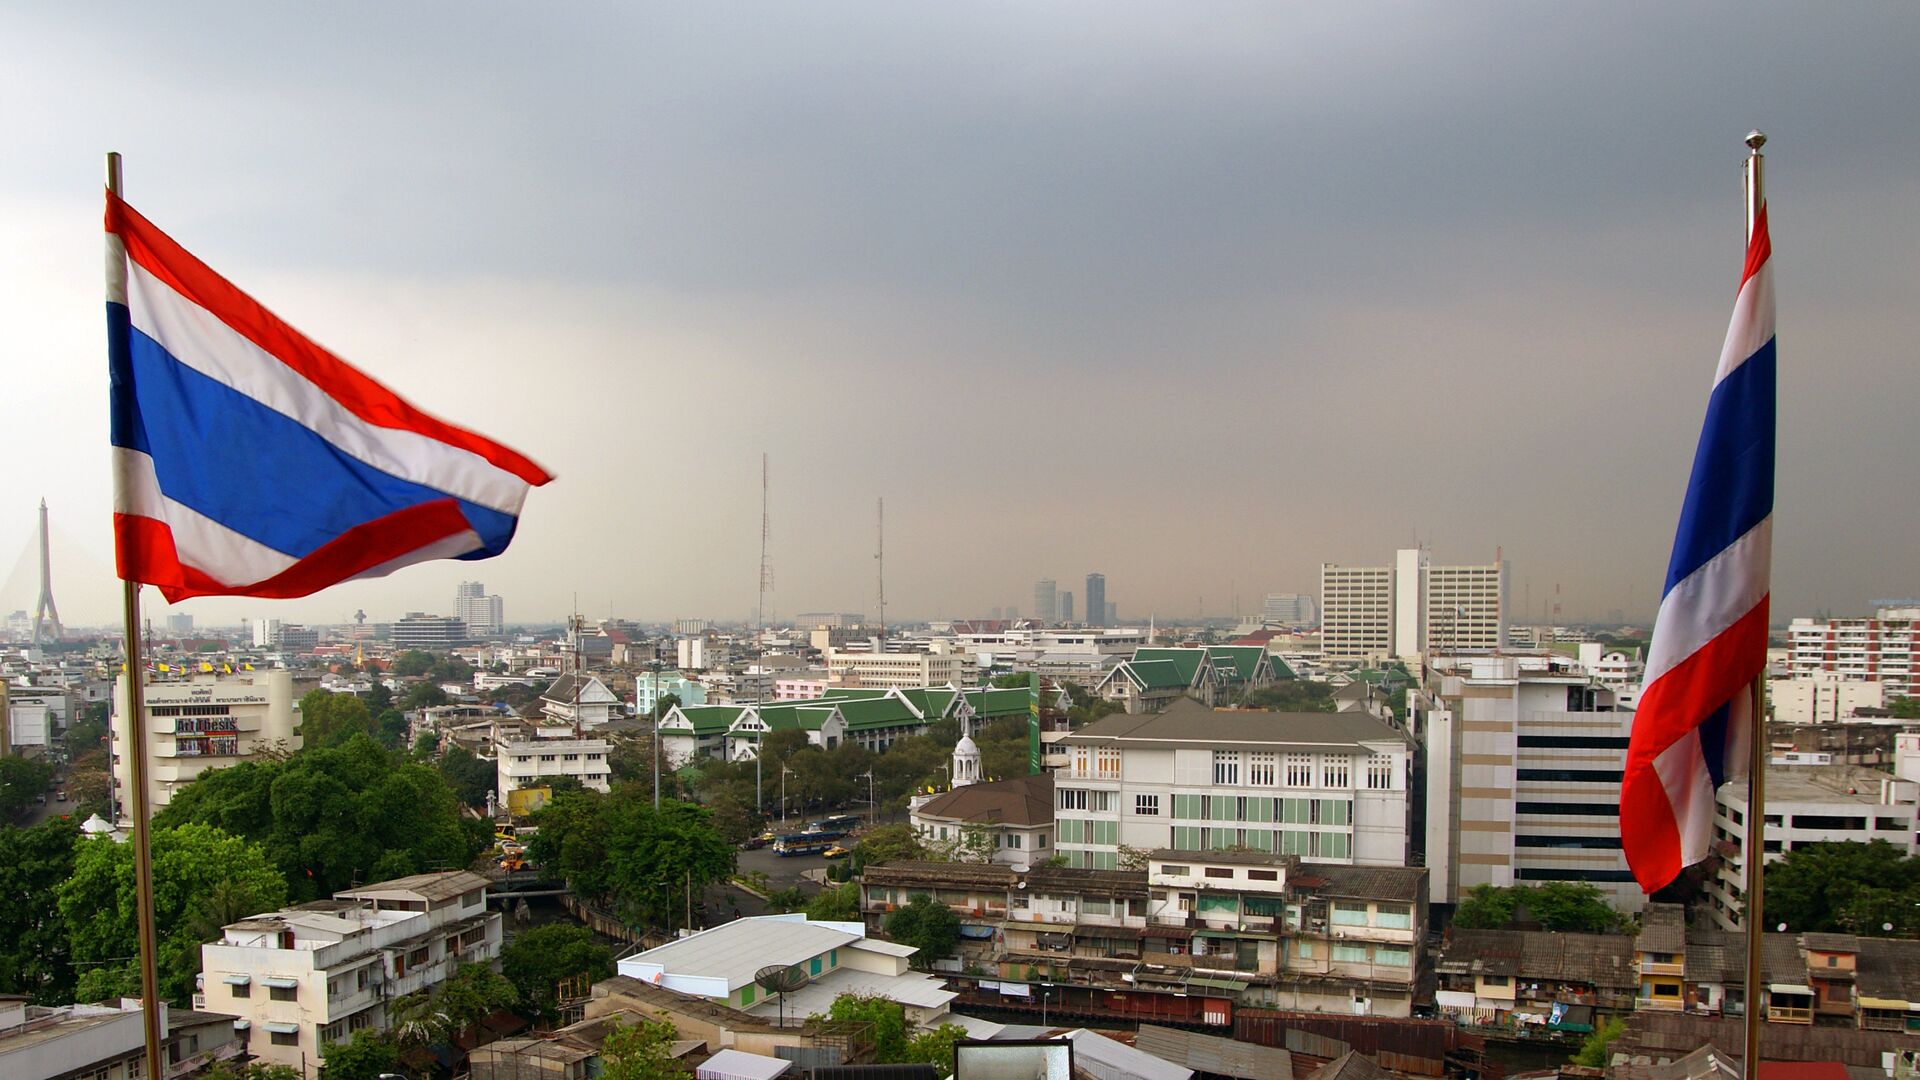 Banderas de Tailandia en Bangkok, la capital del país - Sputnik Mundo, 1920, 27.12.2021